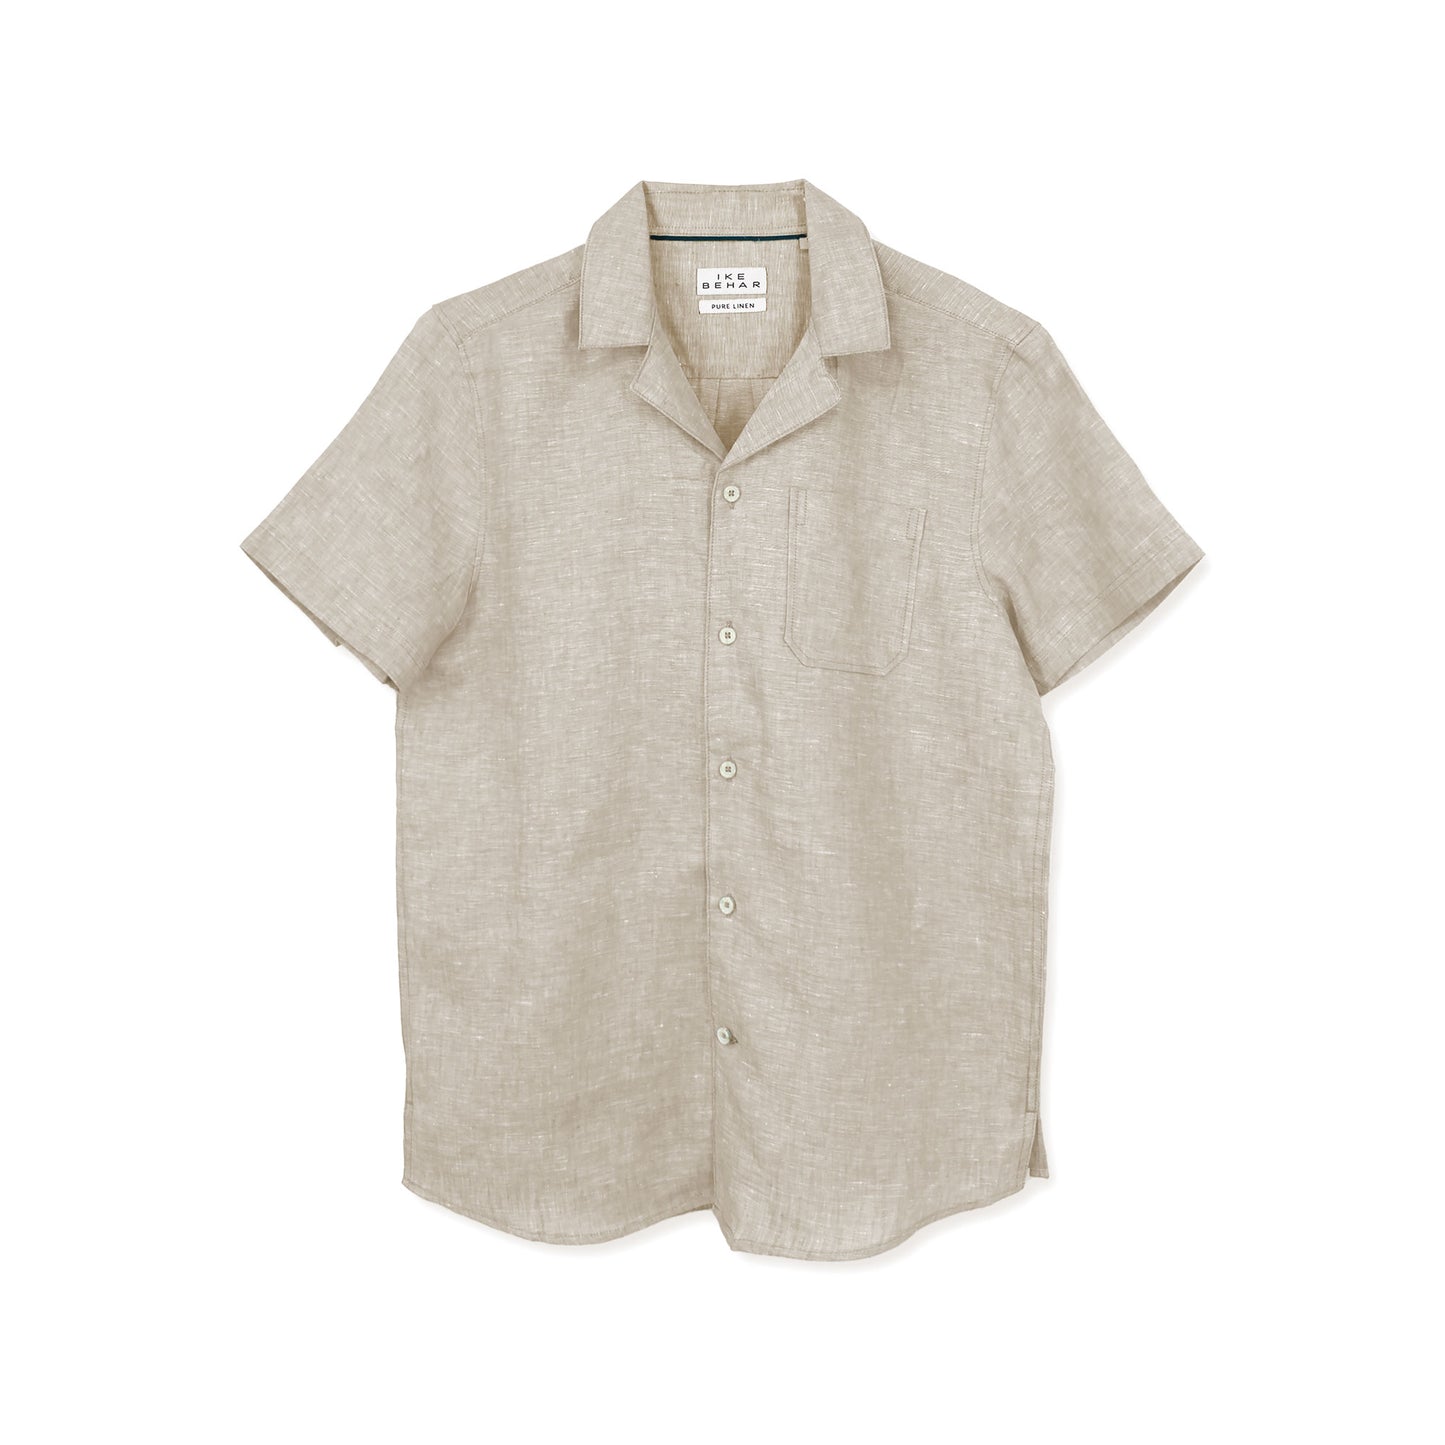 Sandstone Pure Linen Camp Shirt